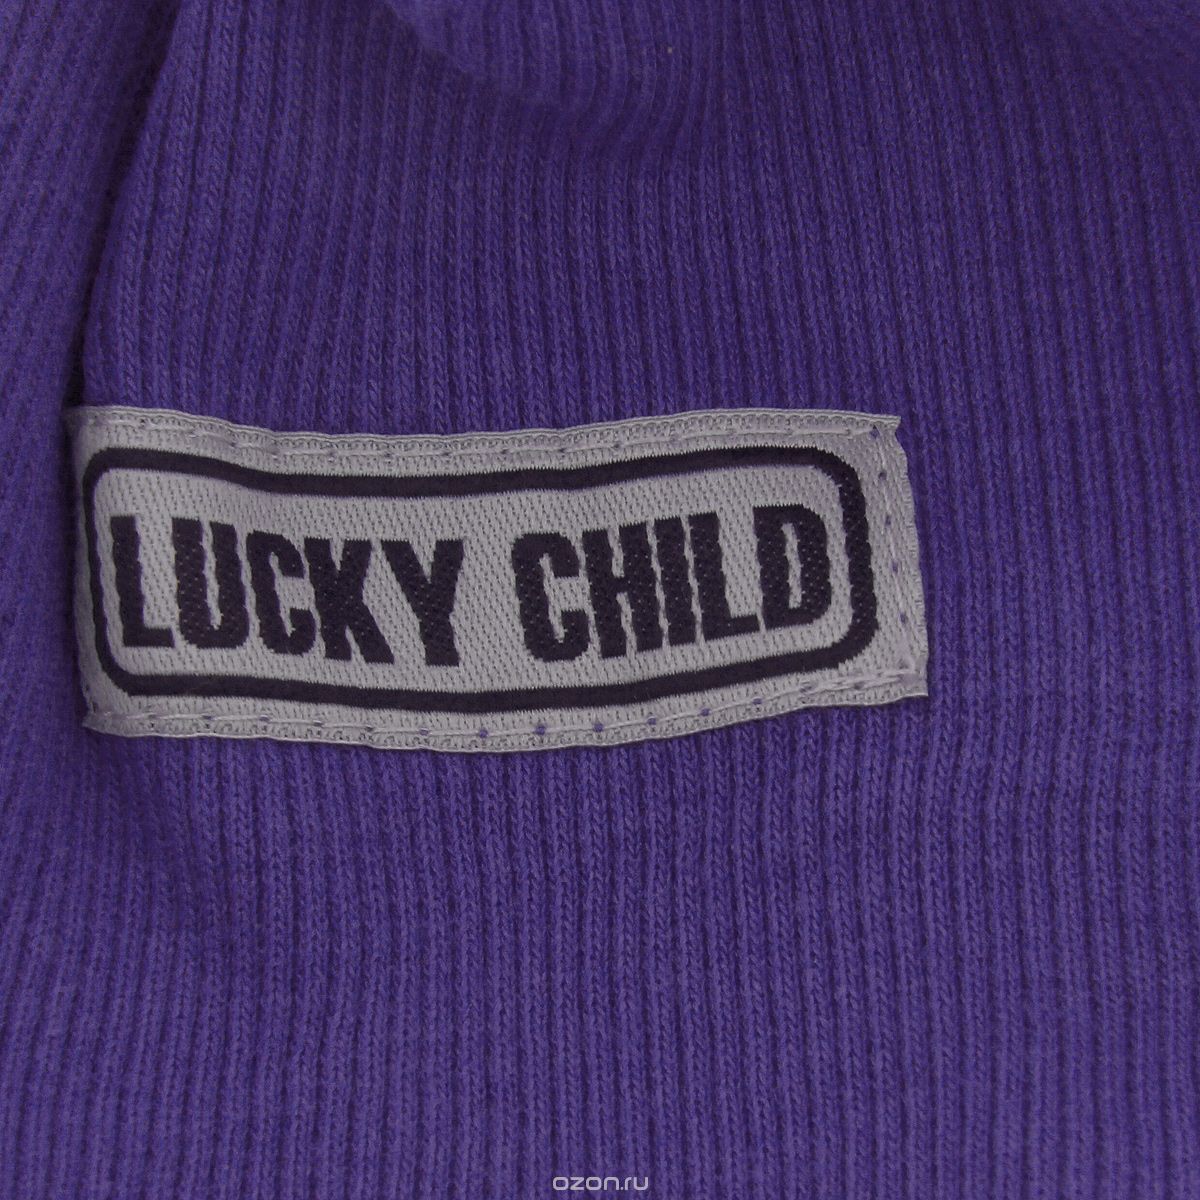   Lucky Child, : . 7-91.  36